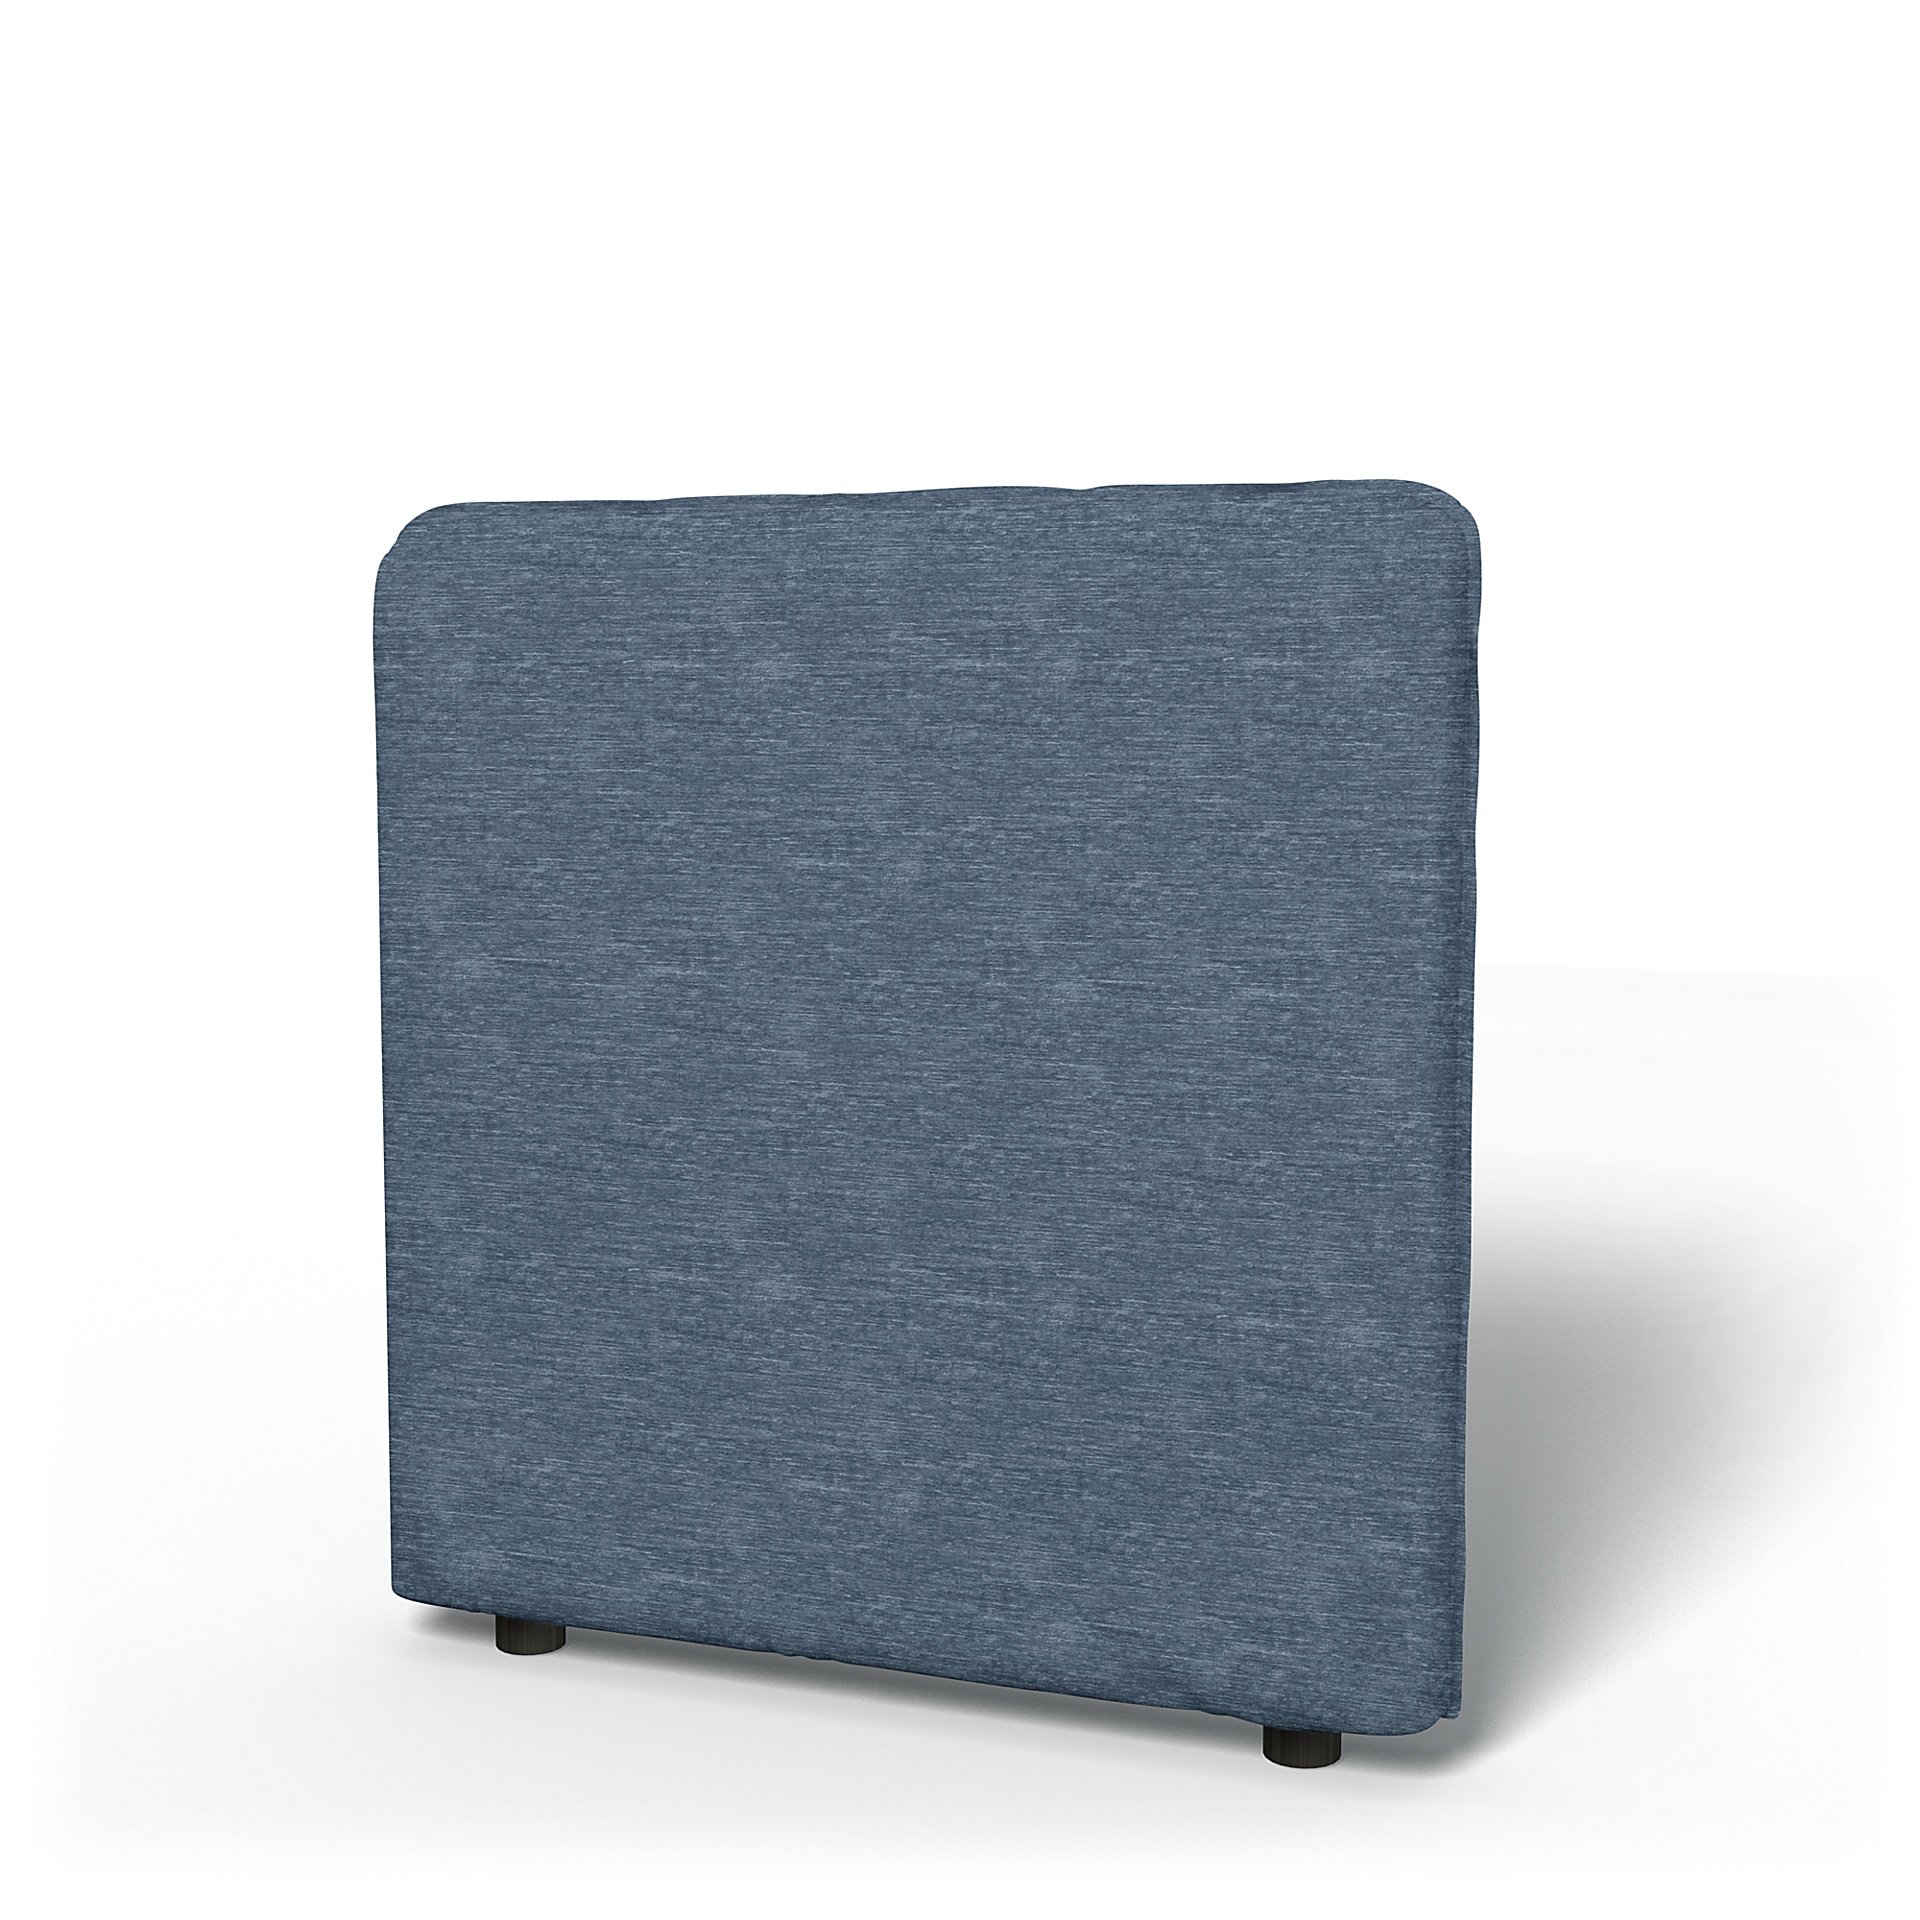 IKEA - Vallentuna Low Backrest Cover 80x80cm 32x32in, Mineral Blue, Velvet - Bemz